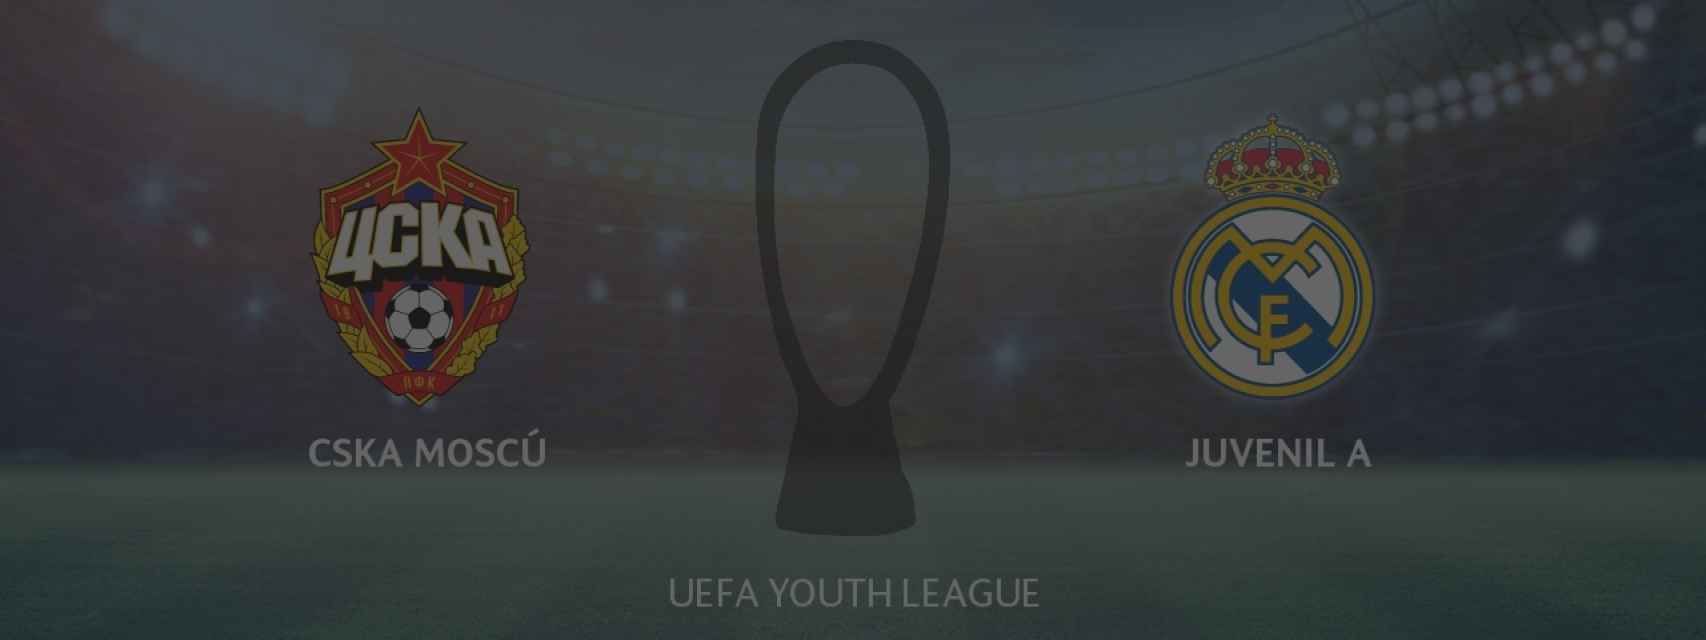 CSKA Moscú - Real Madrid Juvenil A